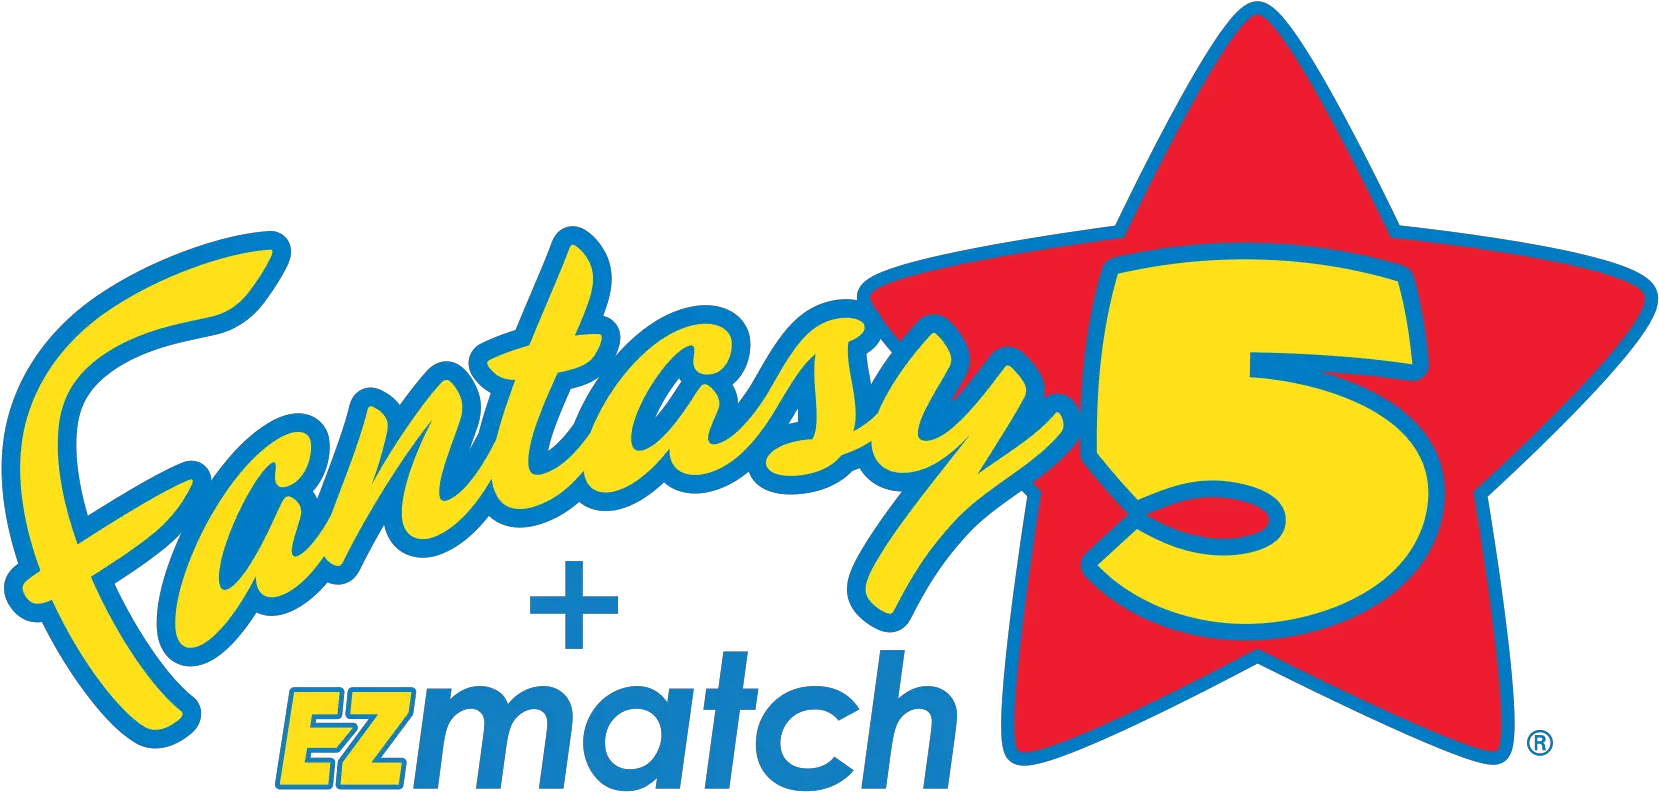 The Streak Will Fantasy 5 Jackpot Run Reach 21 Weeks Fantasy 5 Michigan Lottery Png Streak Png